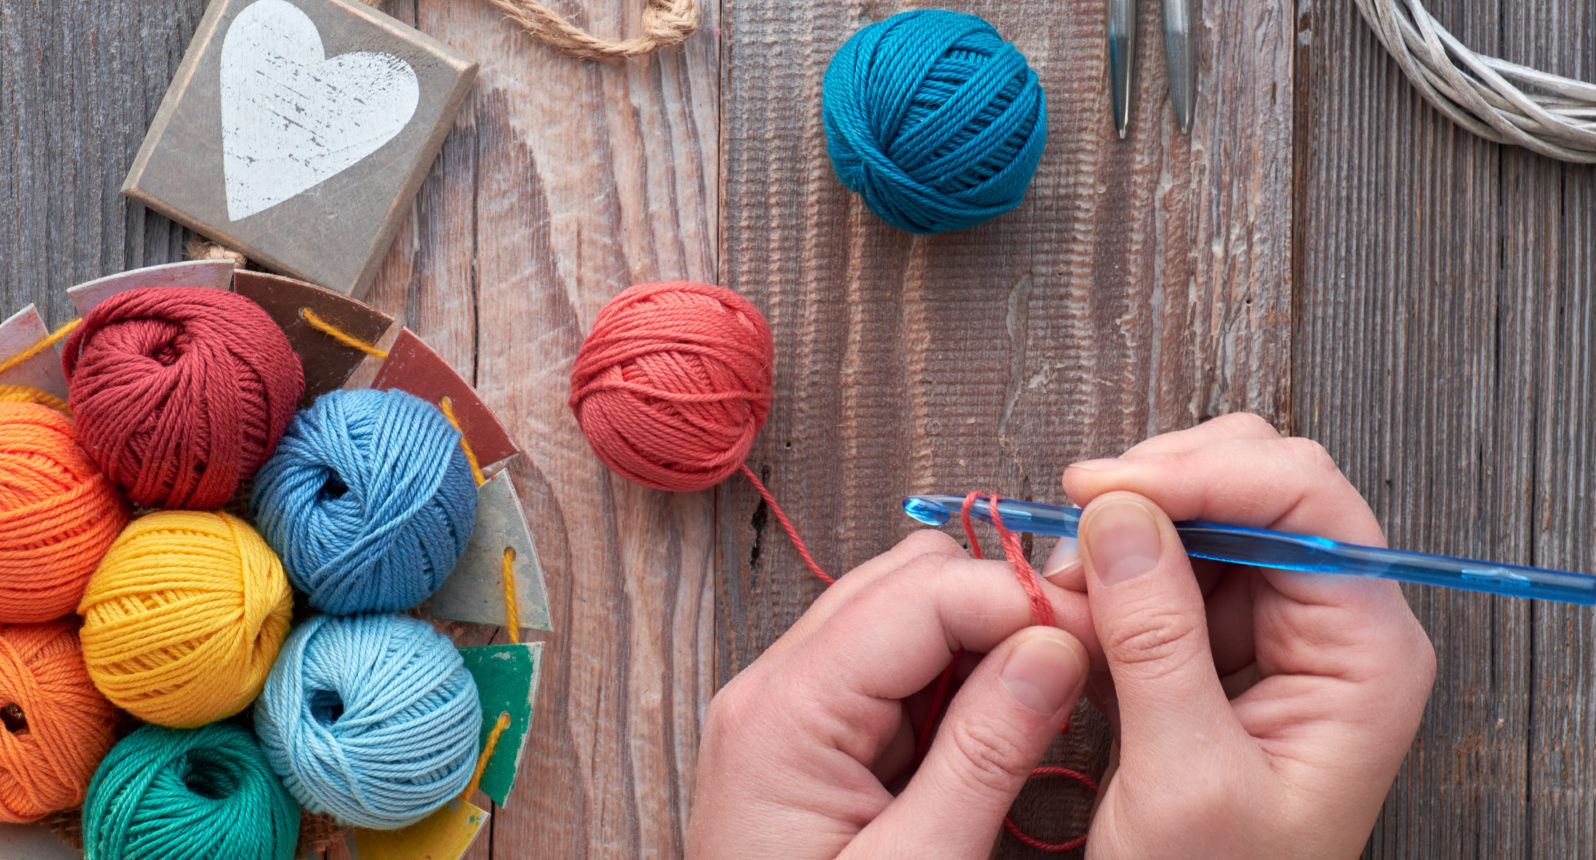 Crochet Hands With Yarn - Knitting Needle Lane - HD Wallpaper 